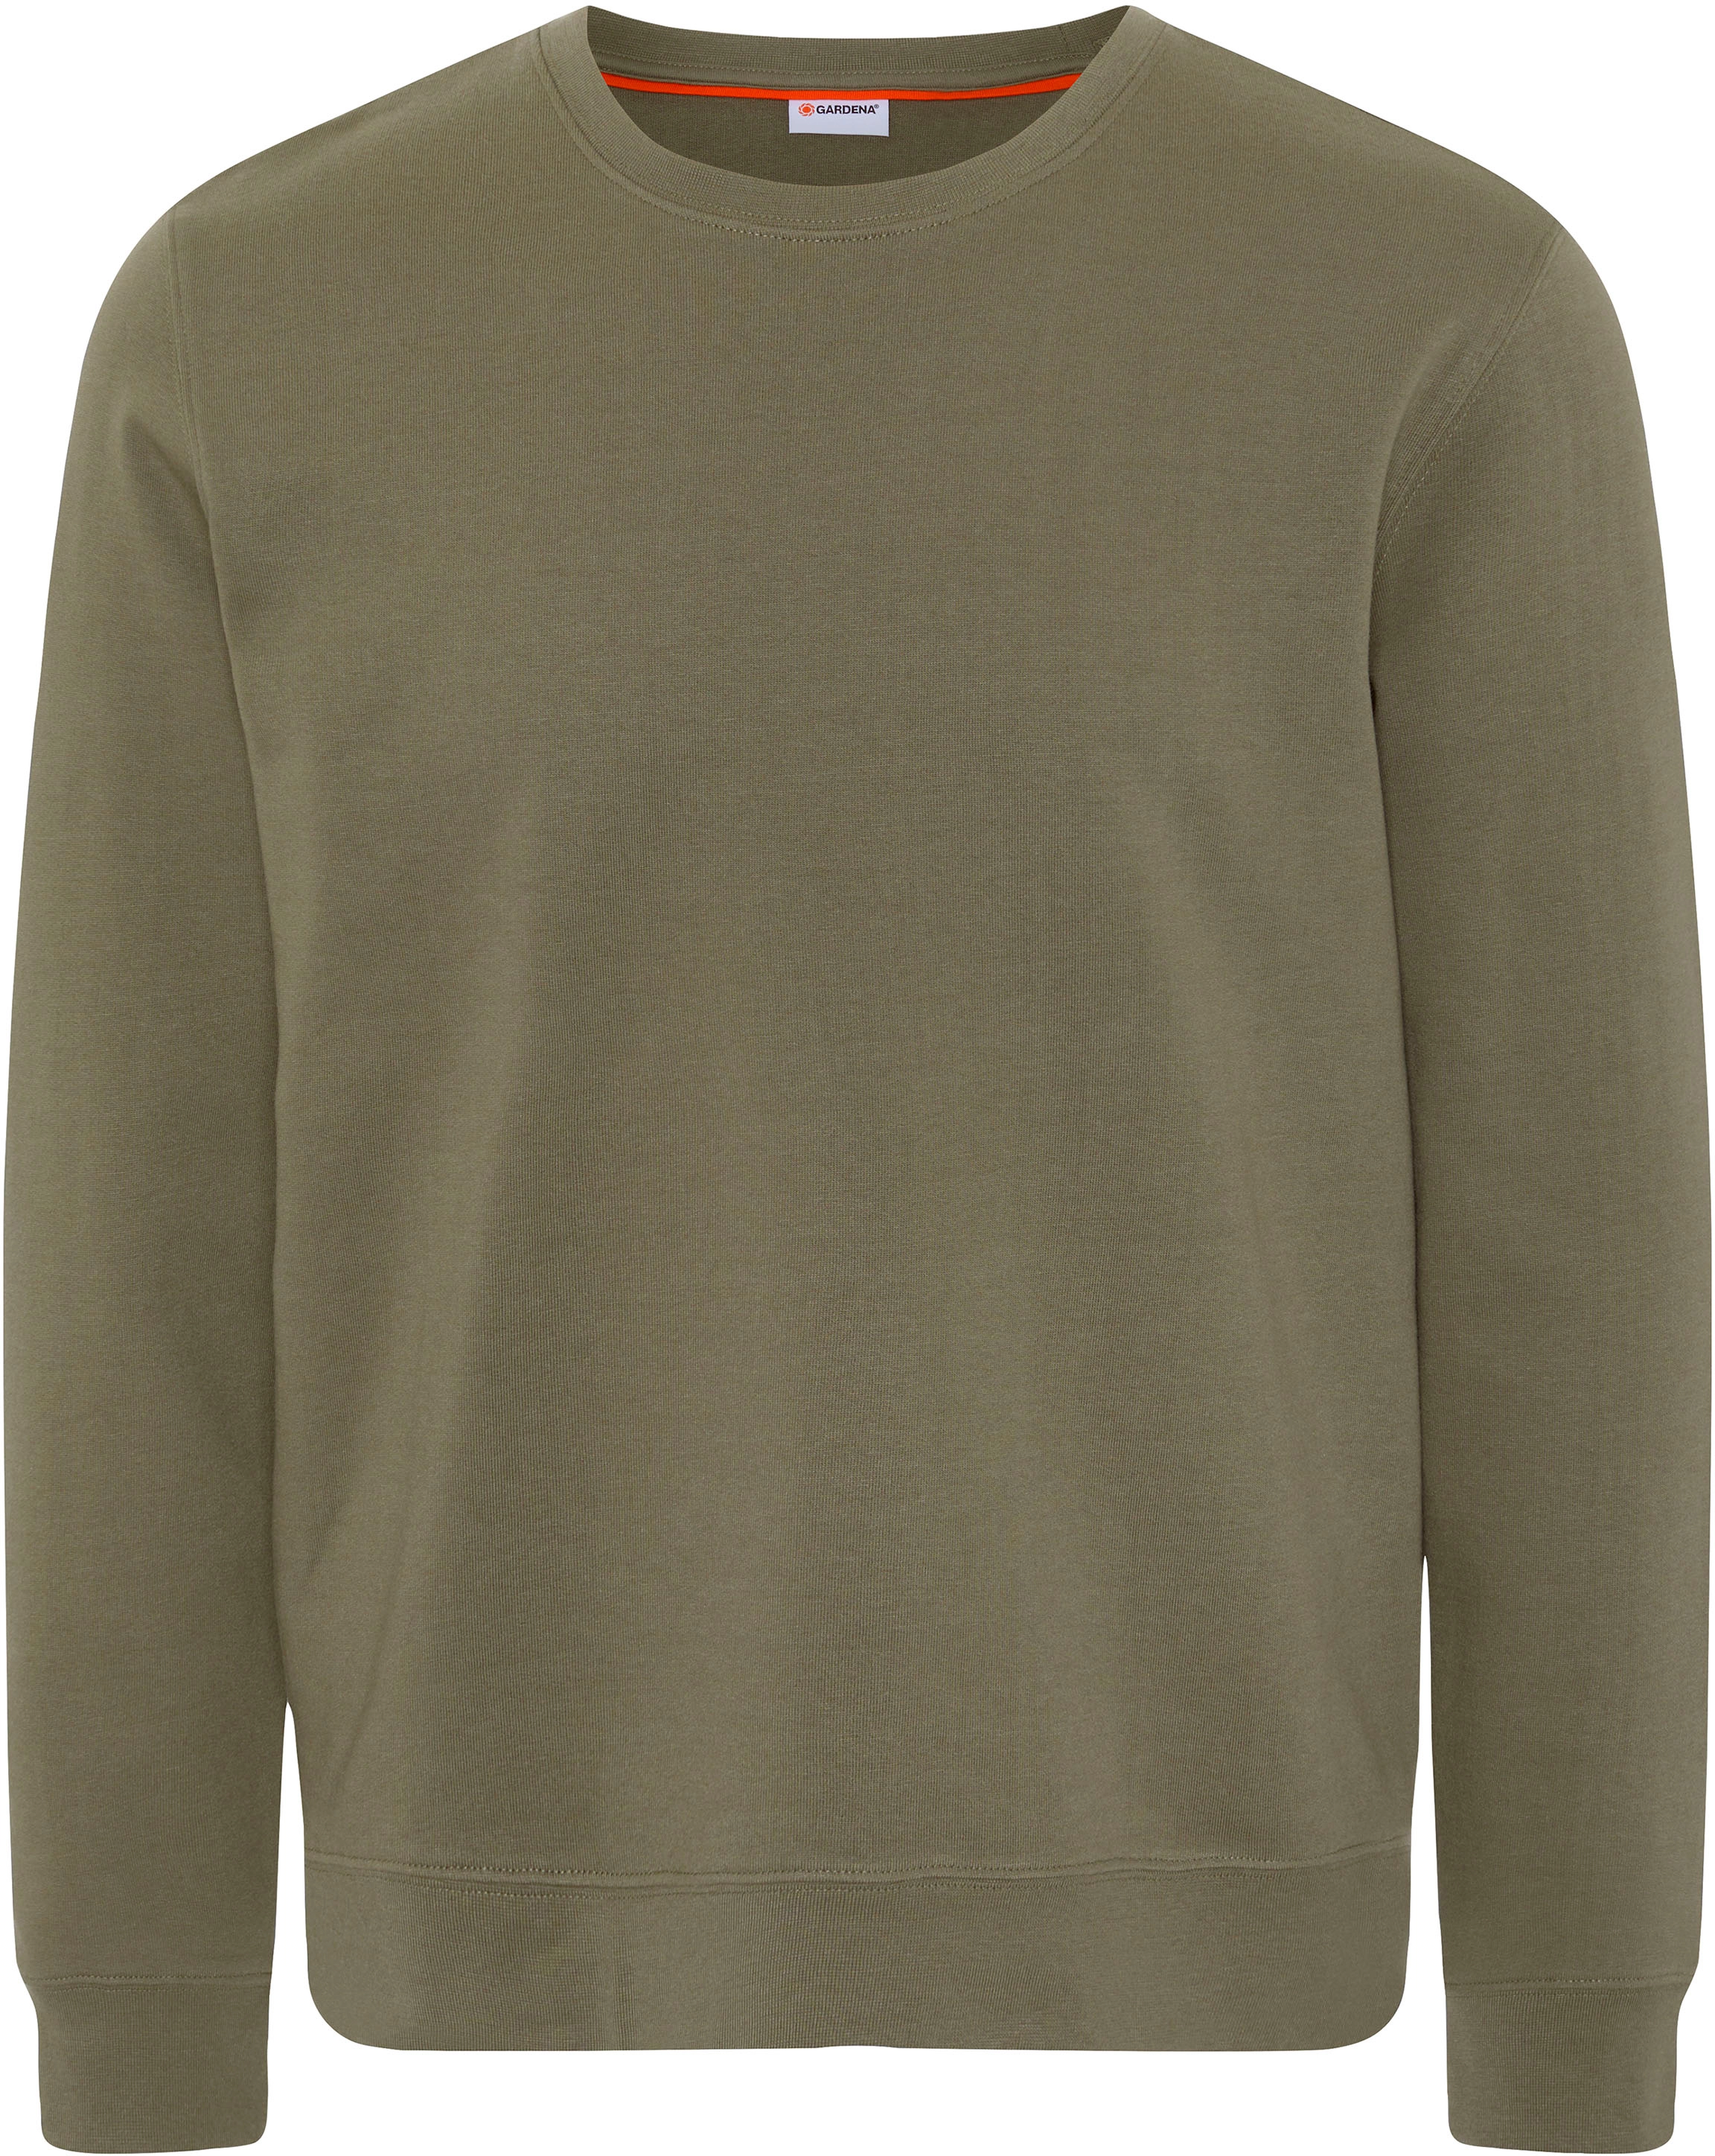 Gardena Herren-Sweatshirt 2XL Dusty Olive kaufen bei OBI